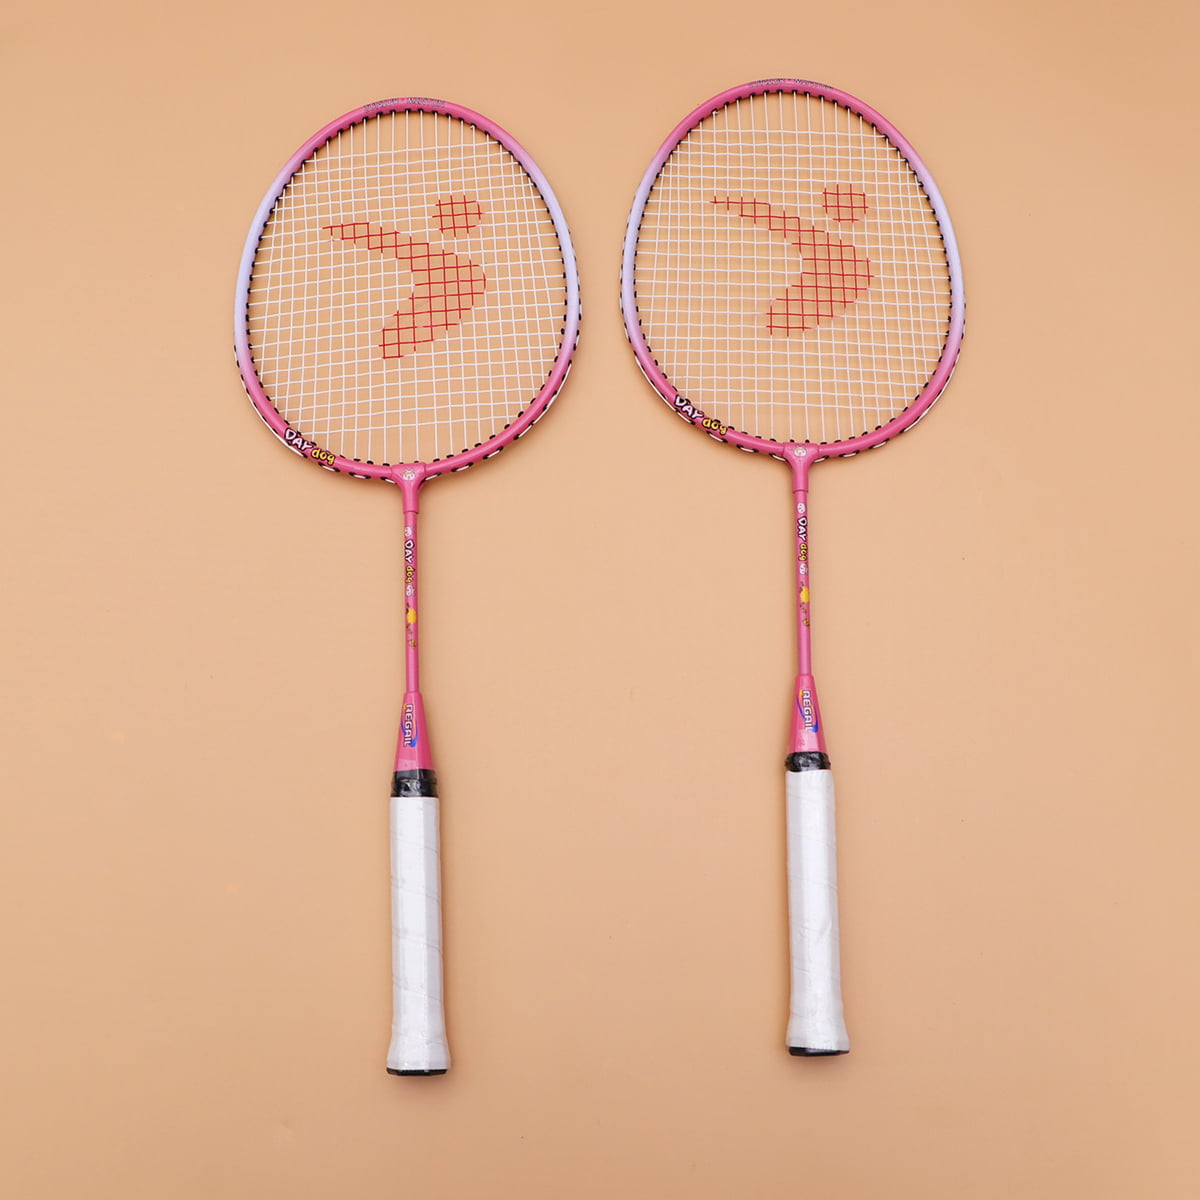 Buy Hemoton 1 Pair Kids Aluminium Alloy Badminton Racket Outdoor Sports  Racket Set Training Pats Paternity Children Cartoon Badminton Racket (Pink)  Online at Lowest Price in Ubuy Iceland. 858678321